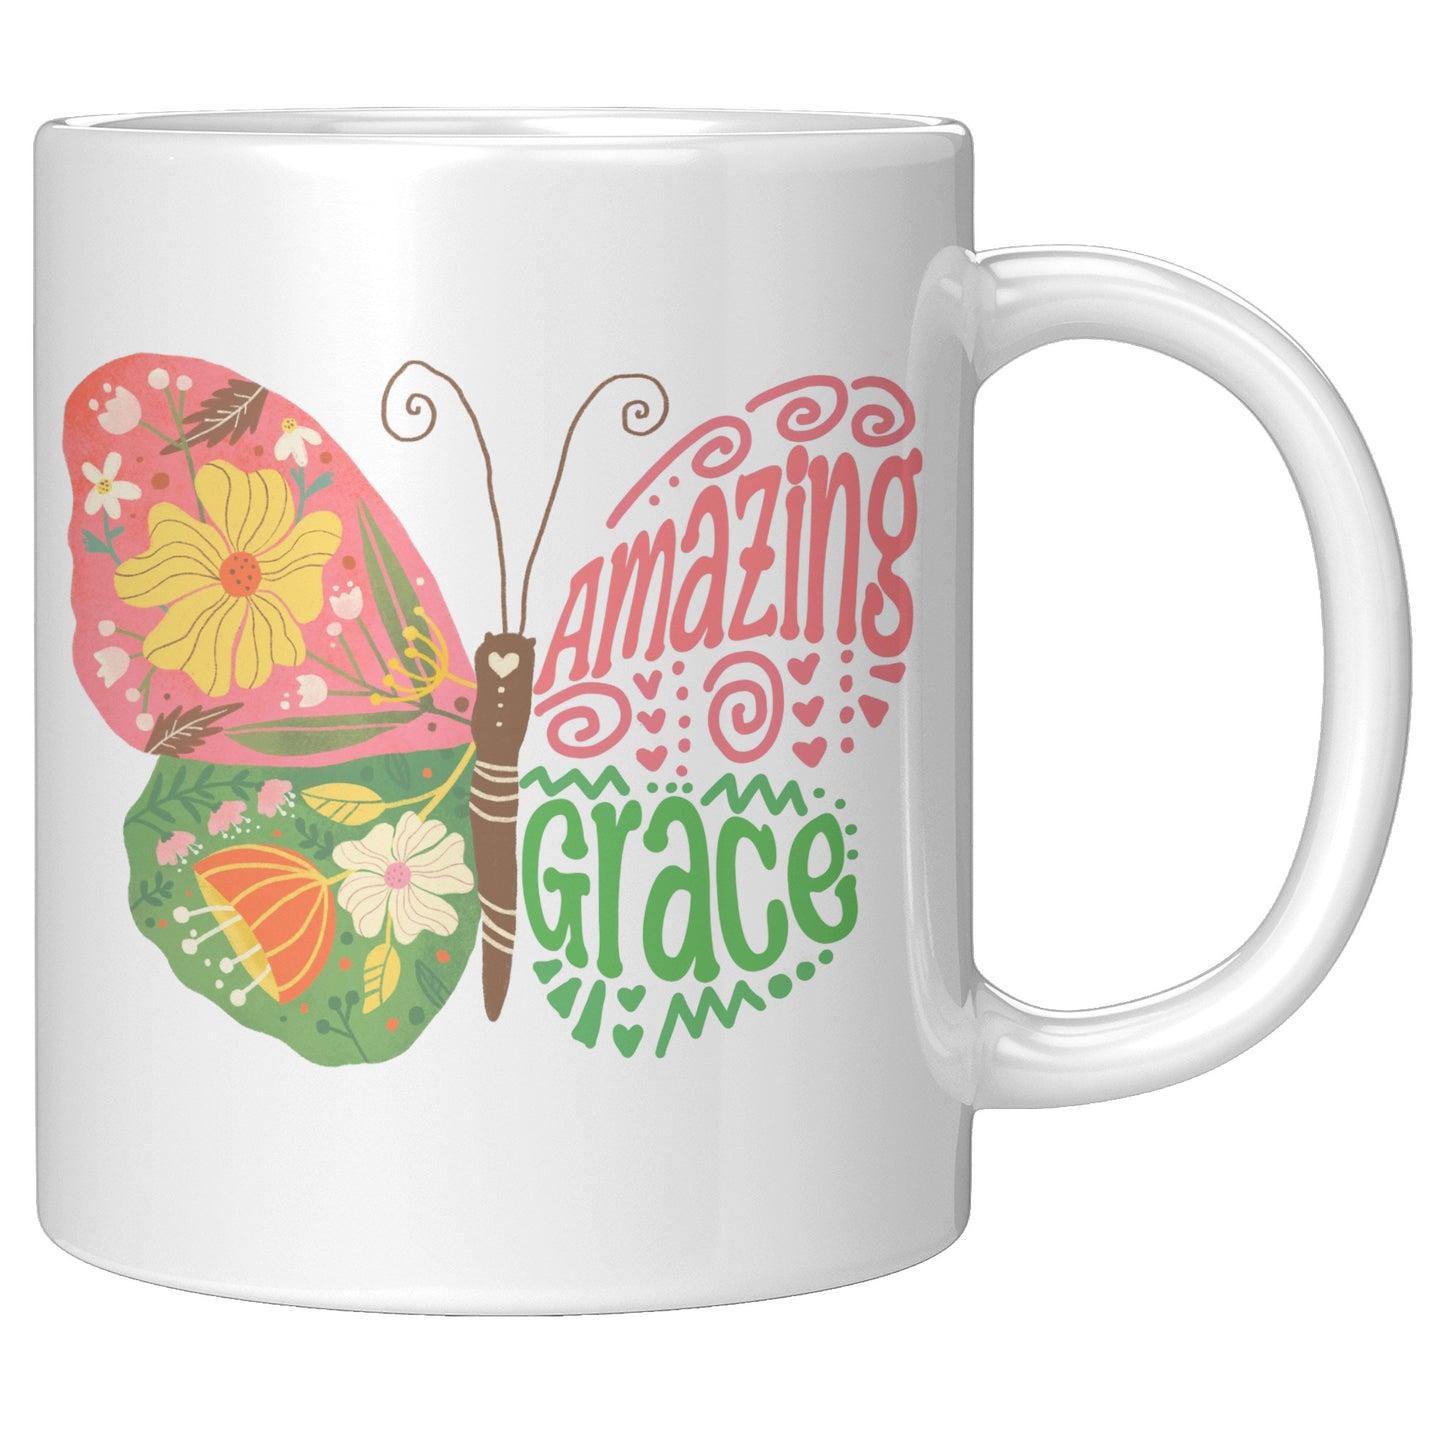 Amazing Grace Coffee Mug